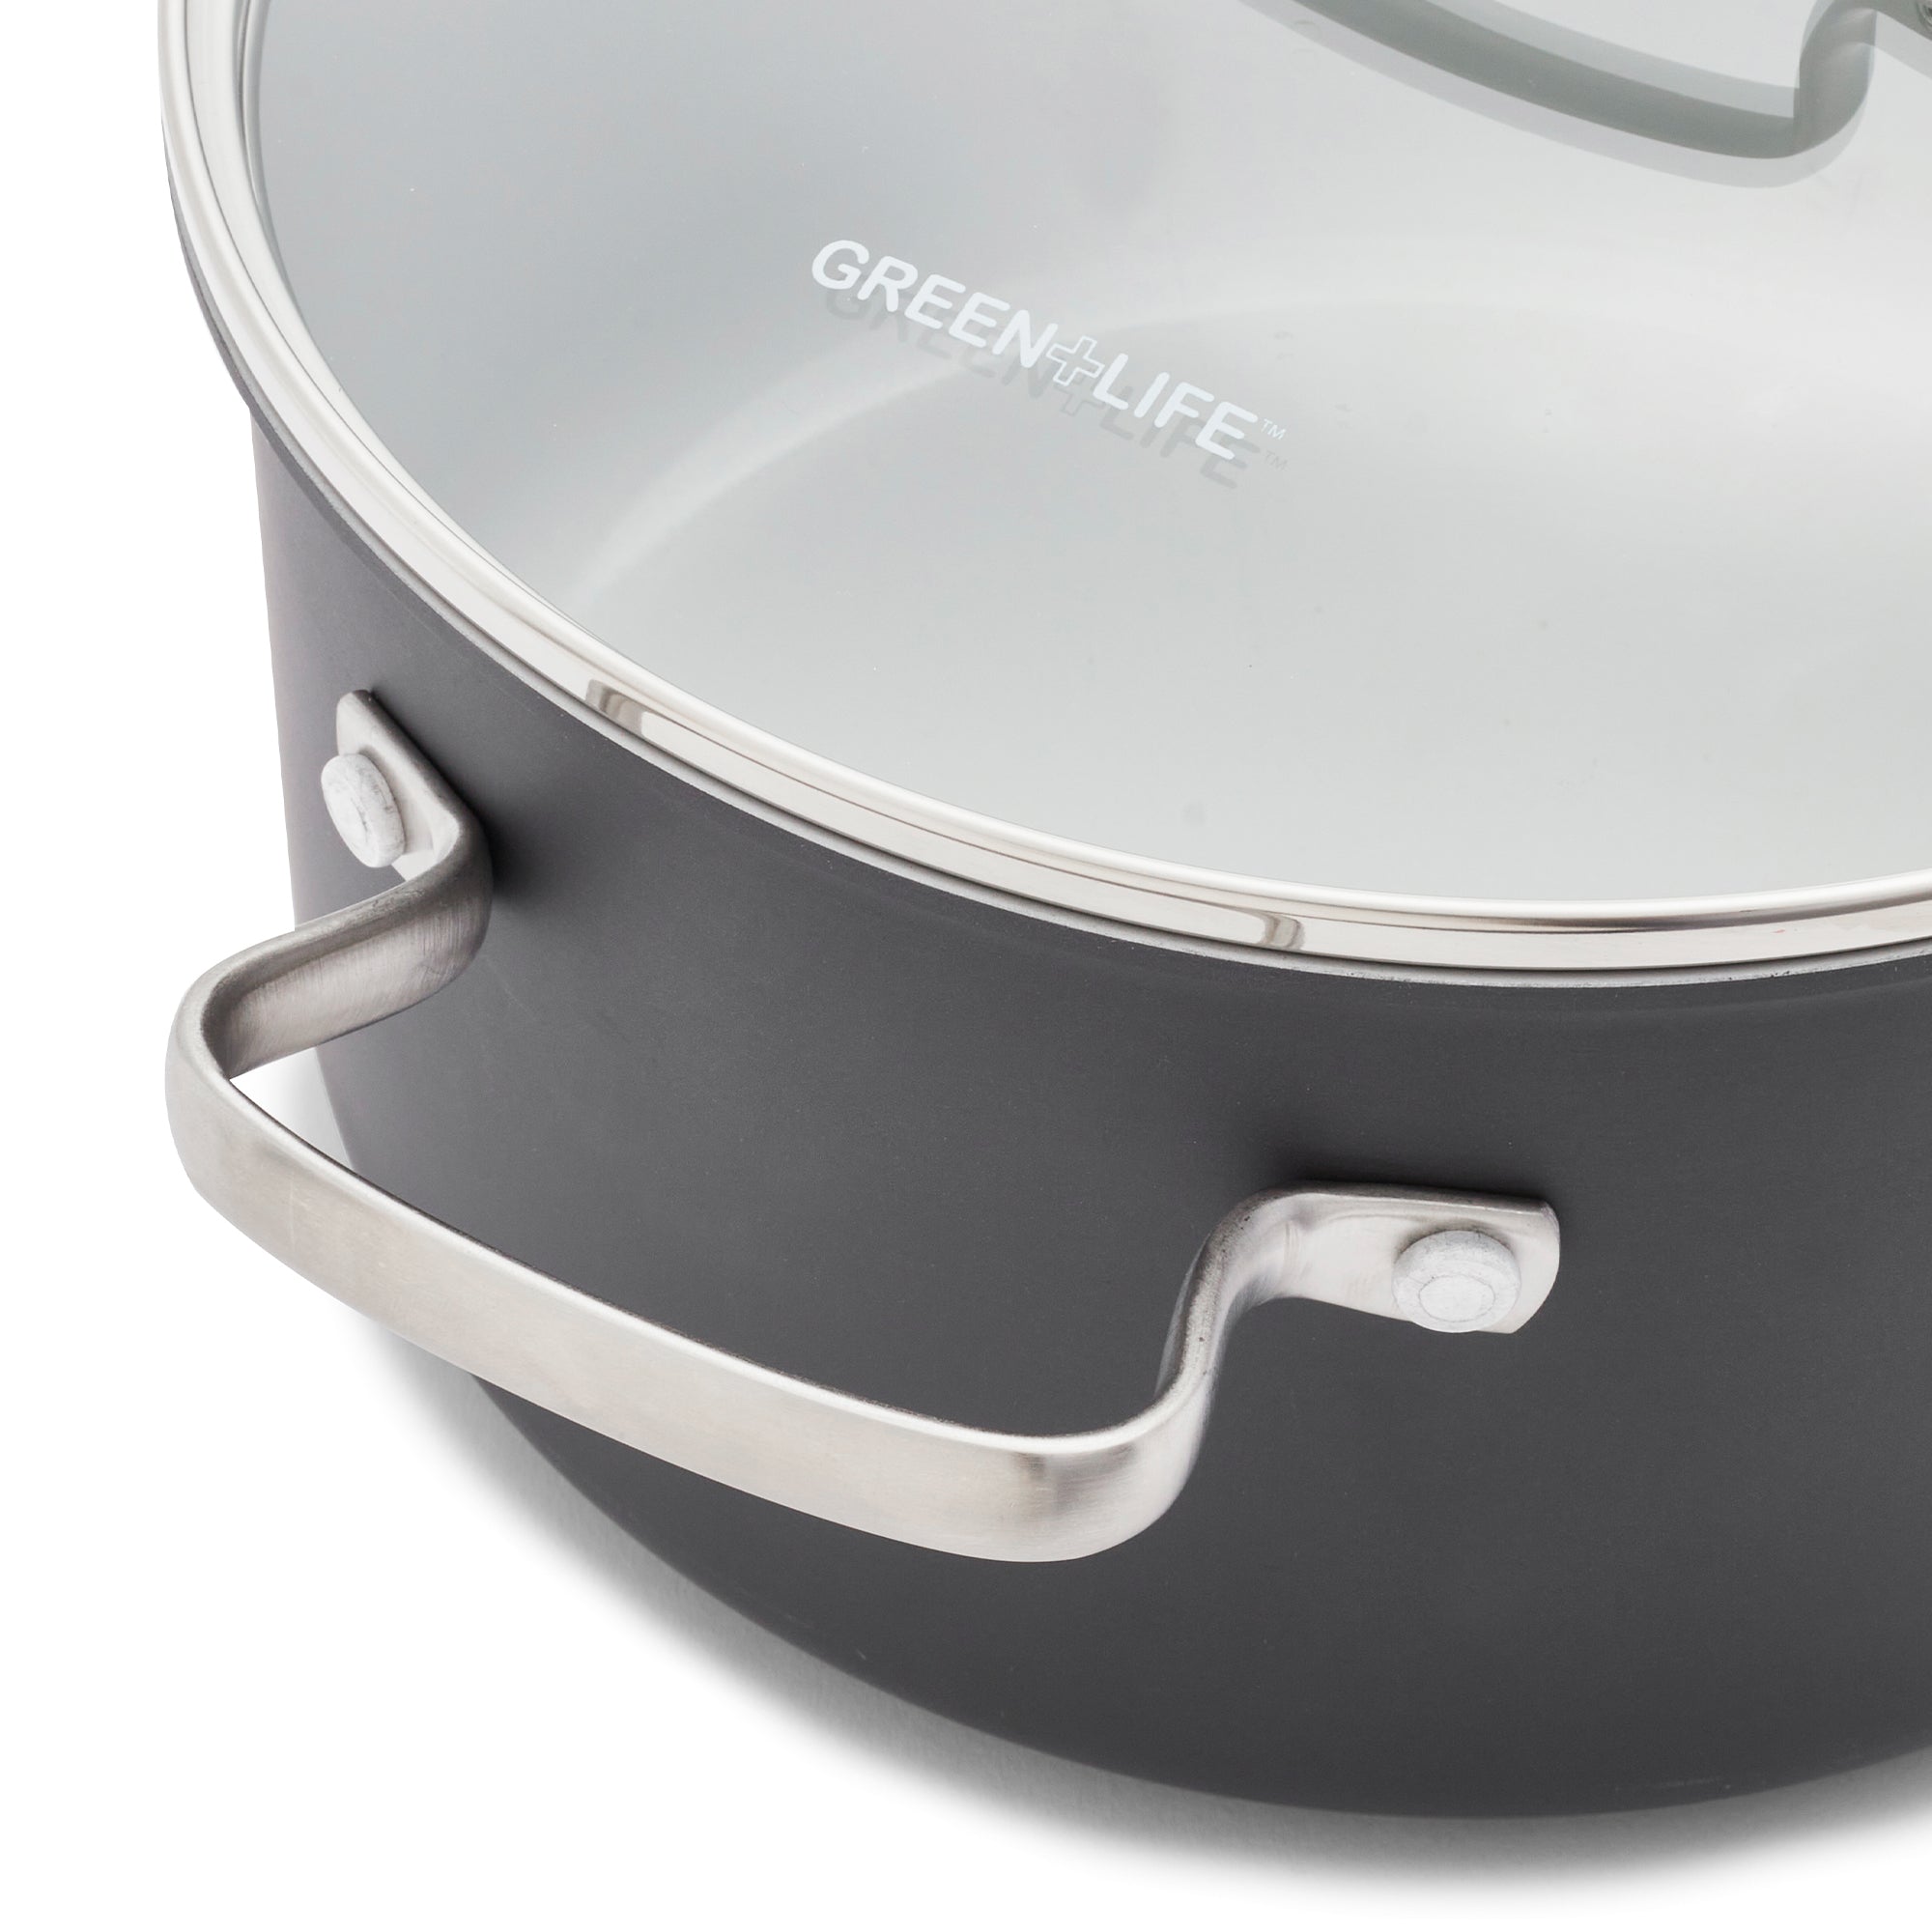 GreenLife Essentials 7-Piece Aluminum Cookware Set CC007864-001 - The Home  Depot